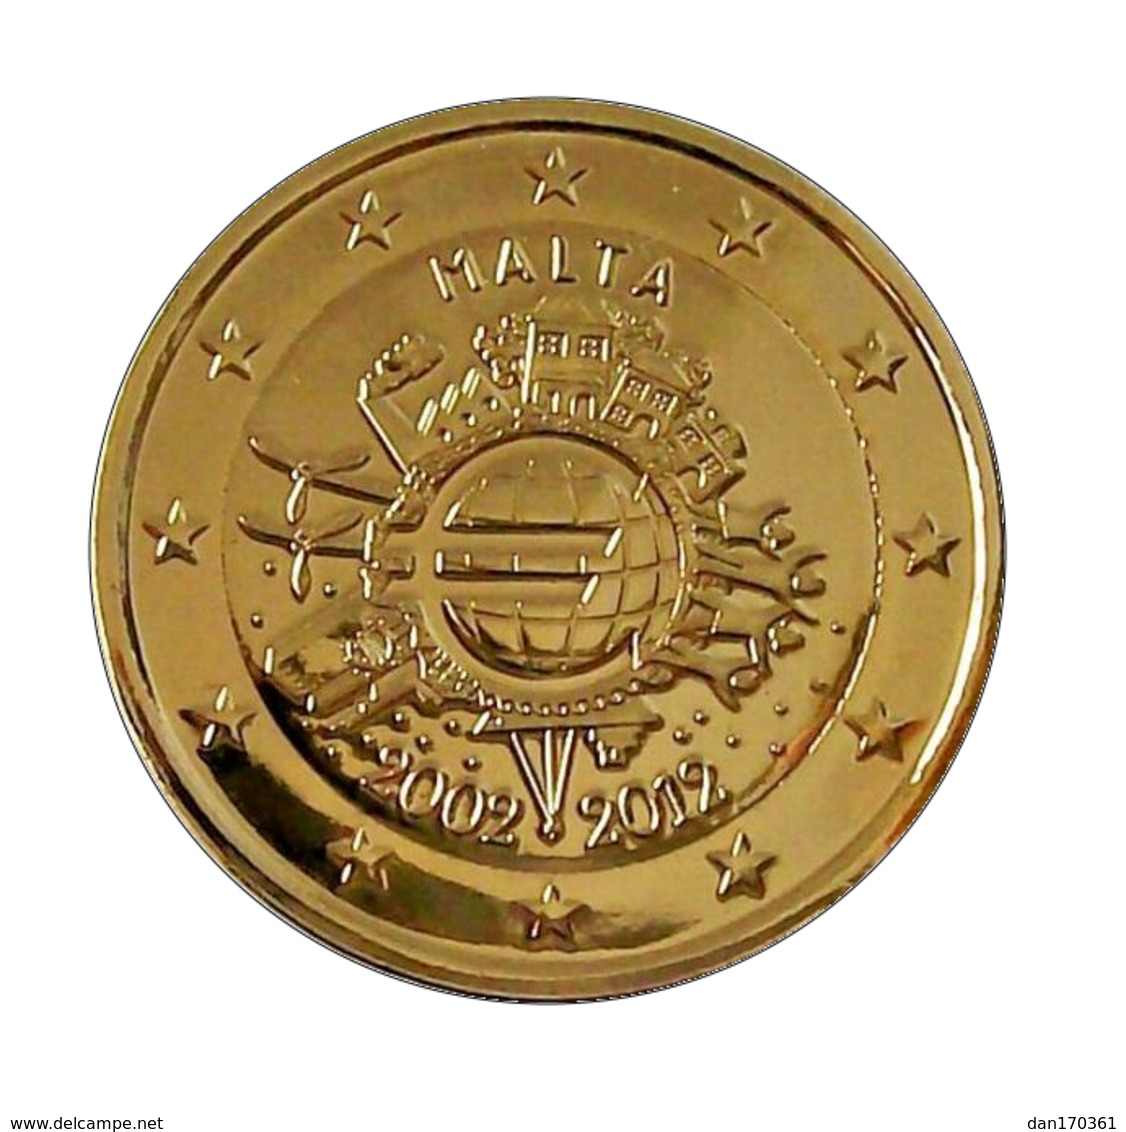 MALTE 2012 - 2 EUROS COMMEMORATIVE - 10 ANS DE L'EURO - FACE COMMUNE - PLAQUE OR - Malta